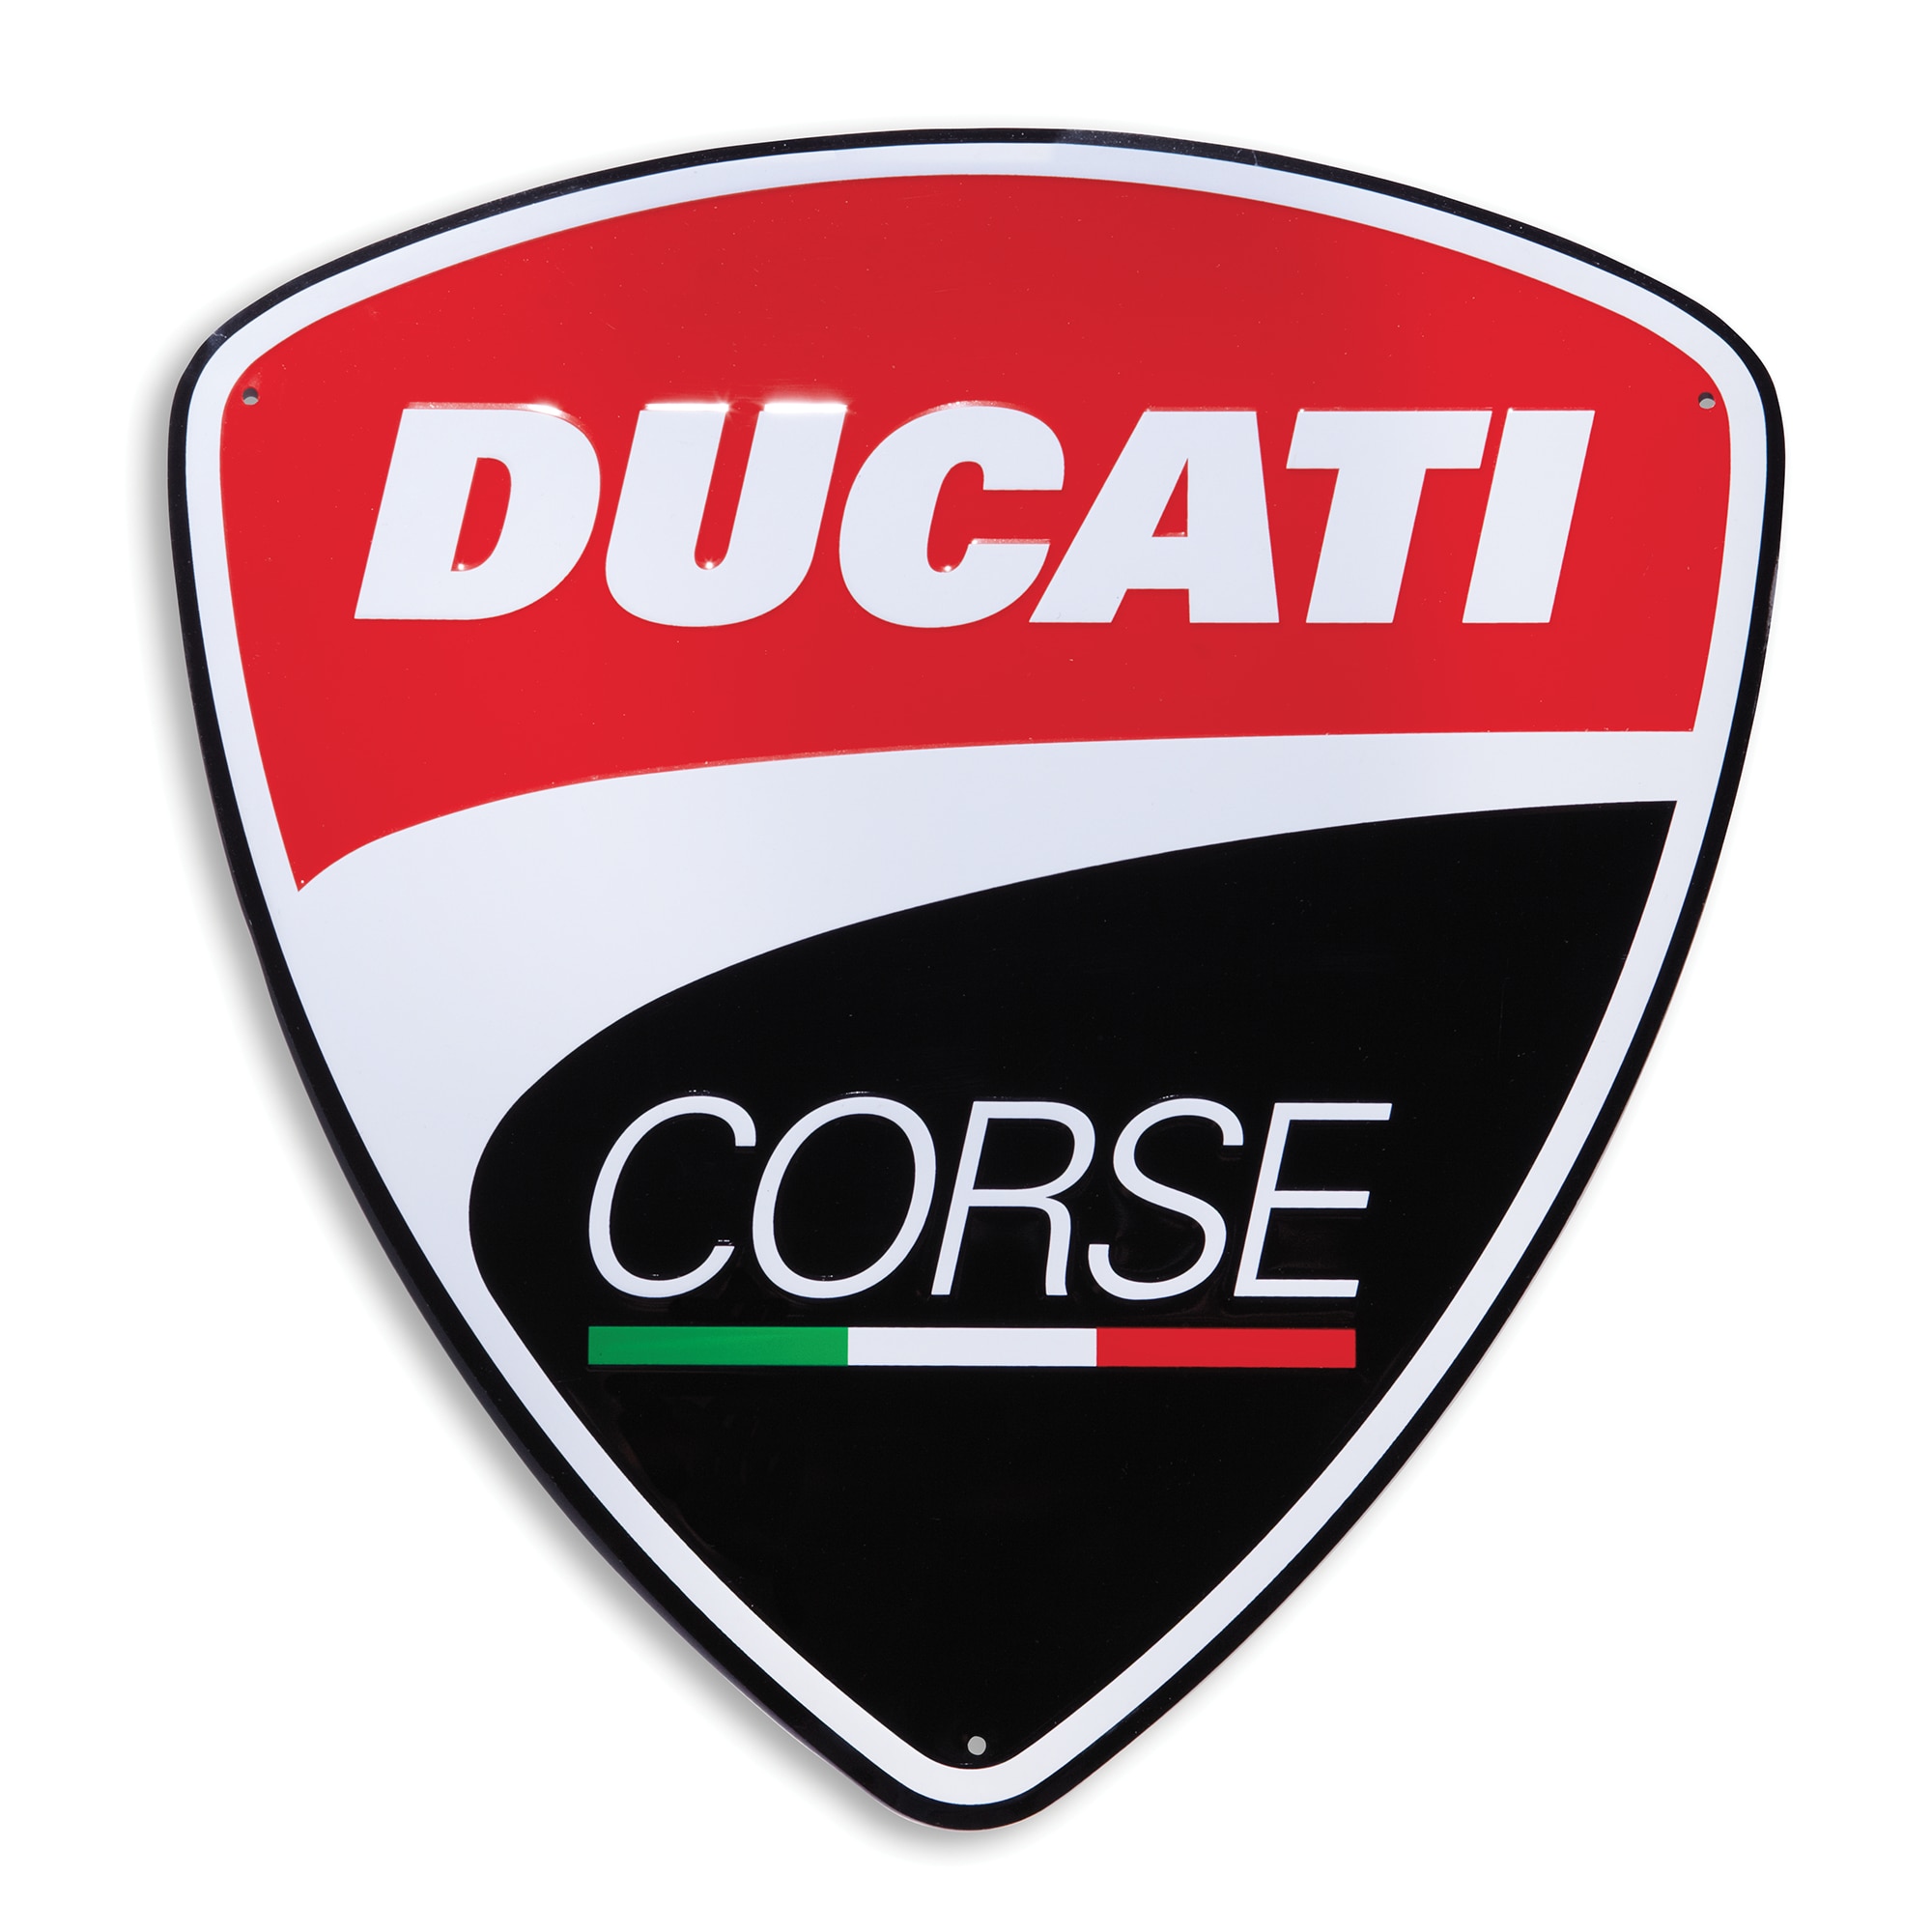 Ducati Corse - Metal insigniaDucati